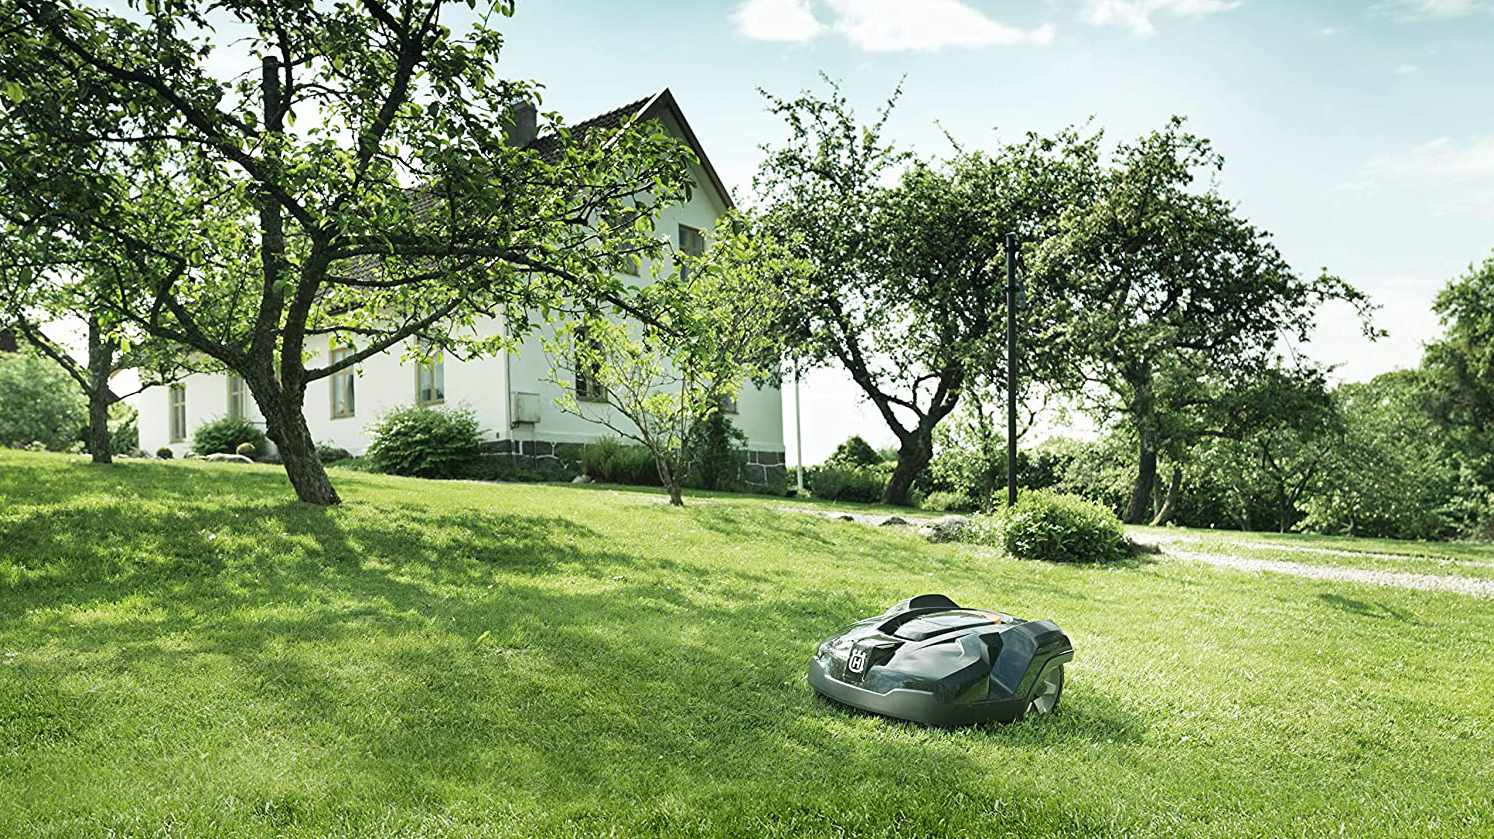 Husqvarna Automower 450X - The best robot lawn mowers